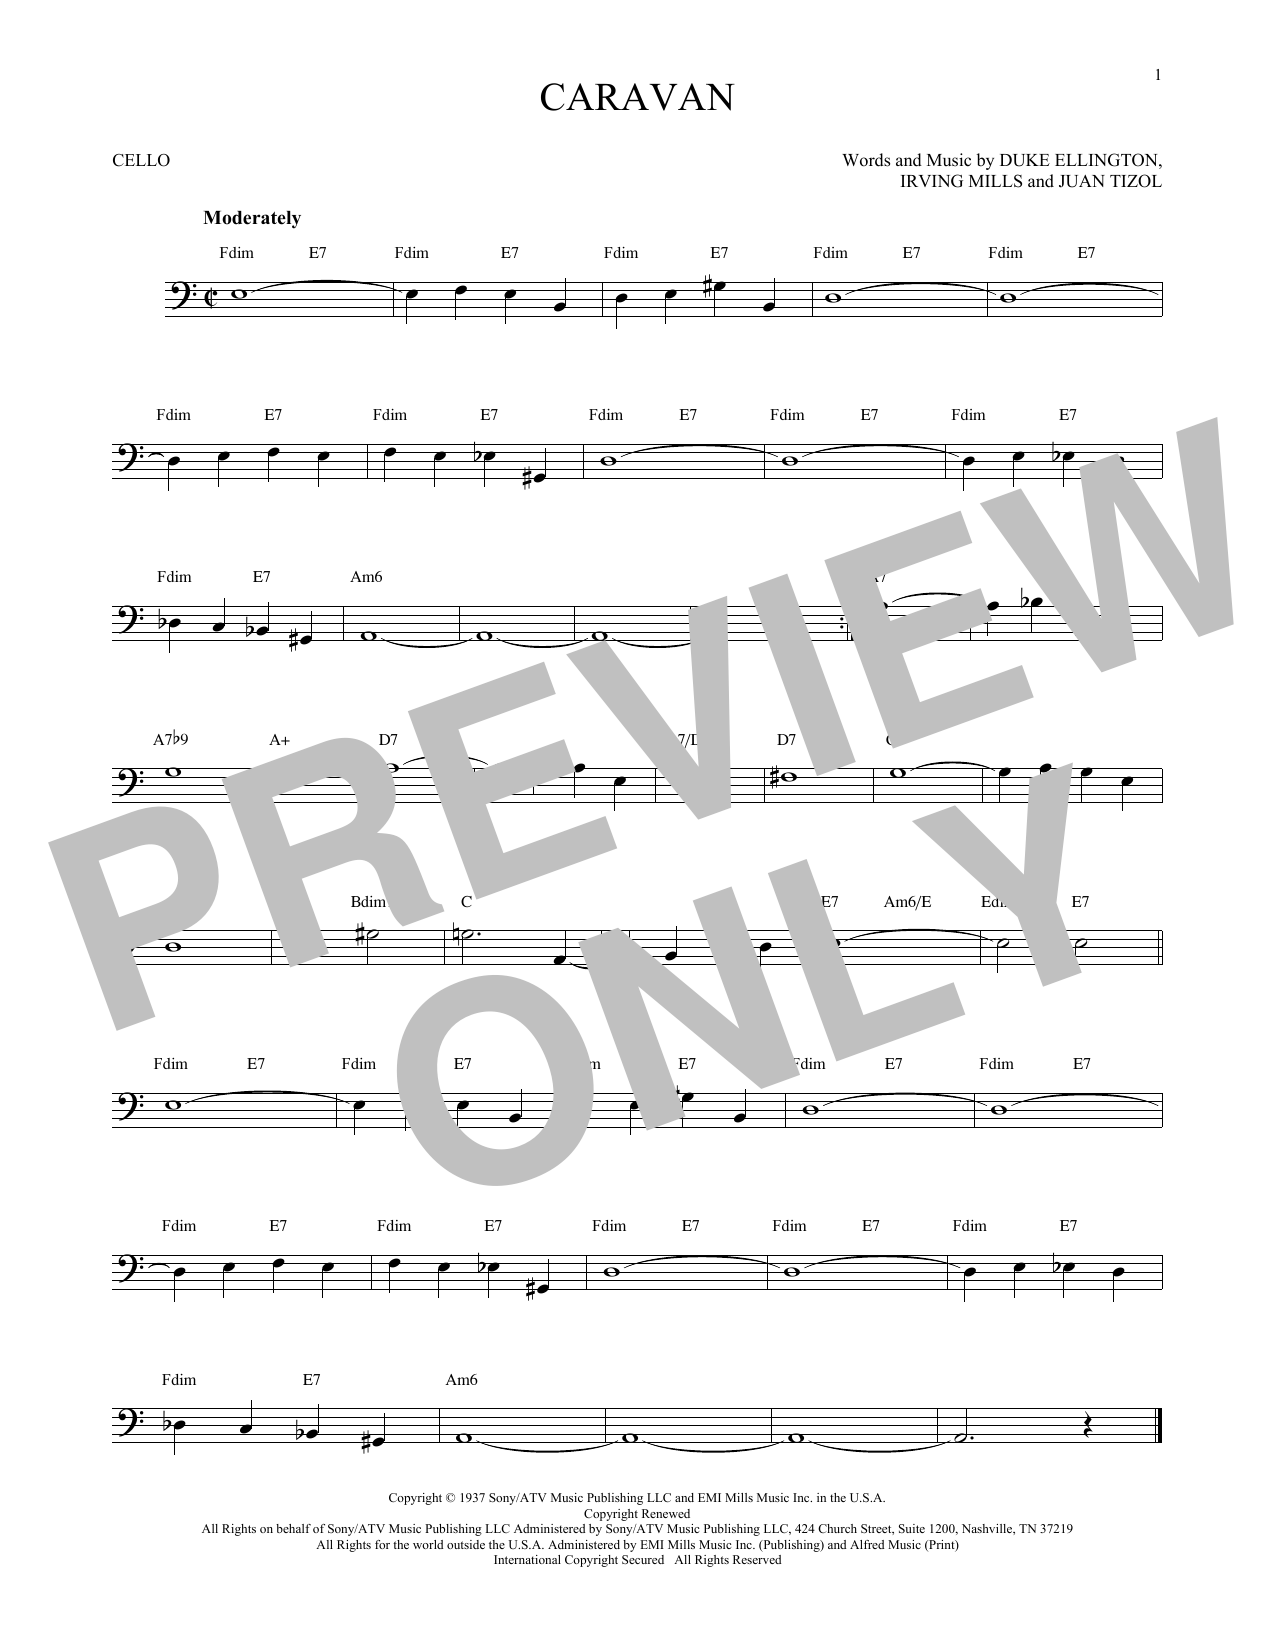 Juan Tizol & Duke Ellington Caravan Sheet Music Notes & Chords for Cello - Download or Print PDF